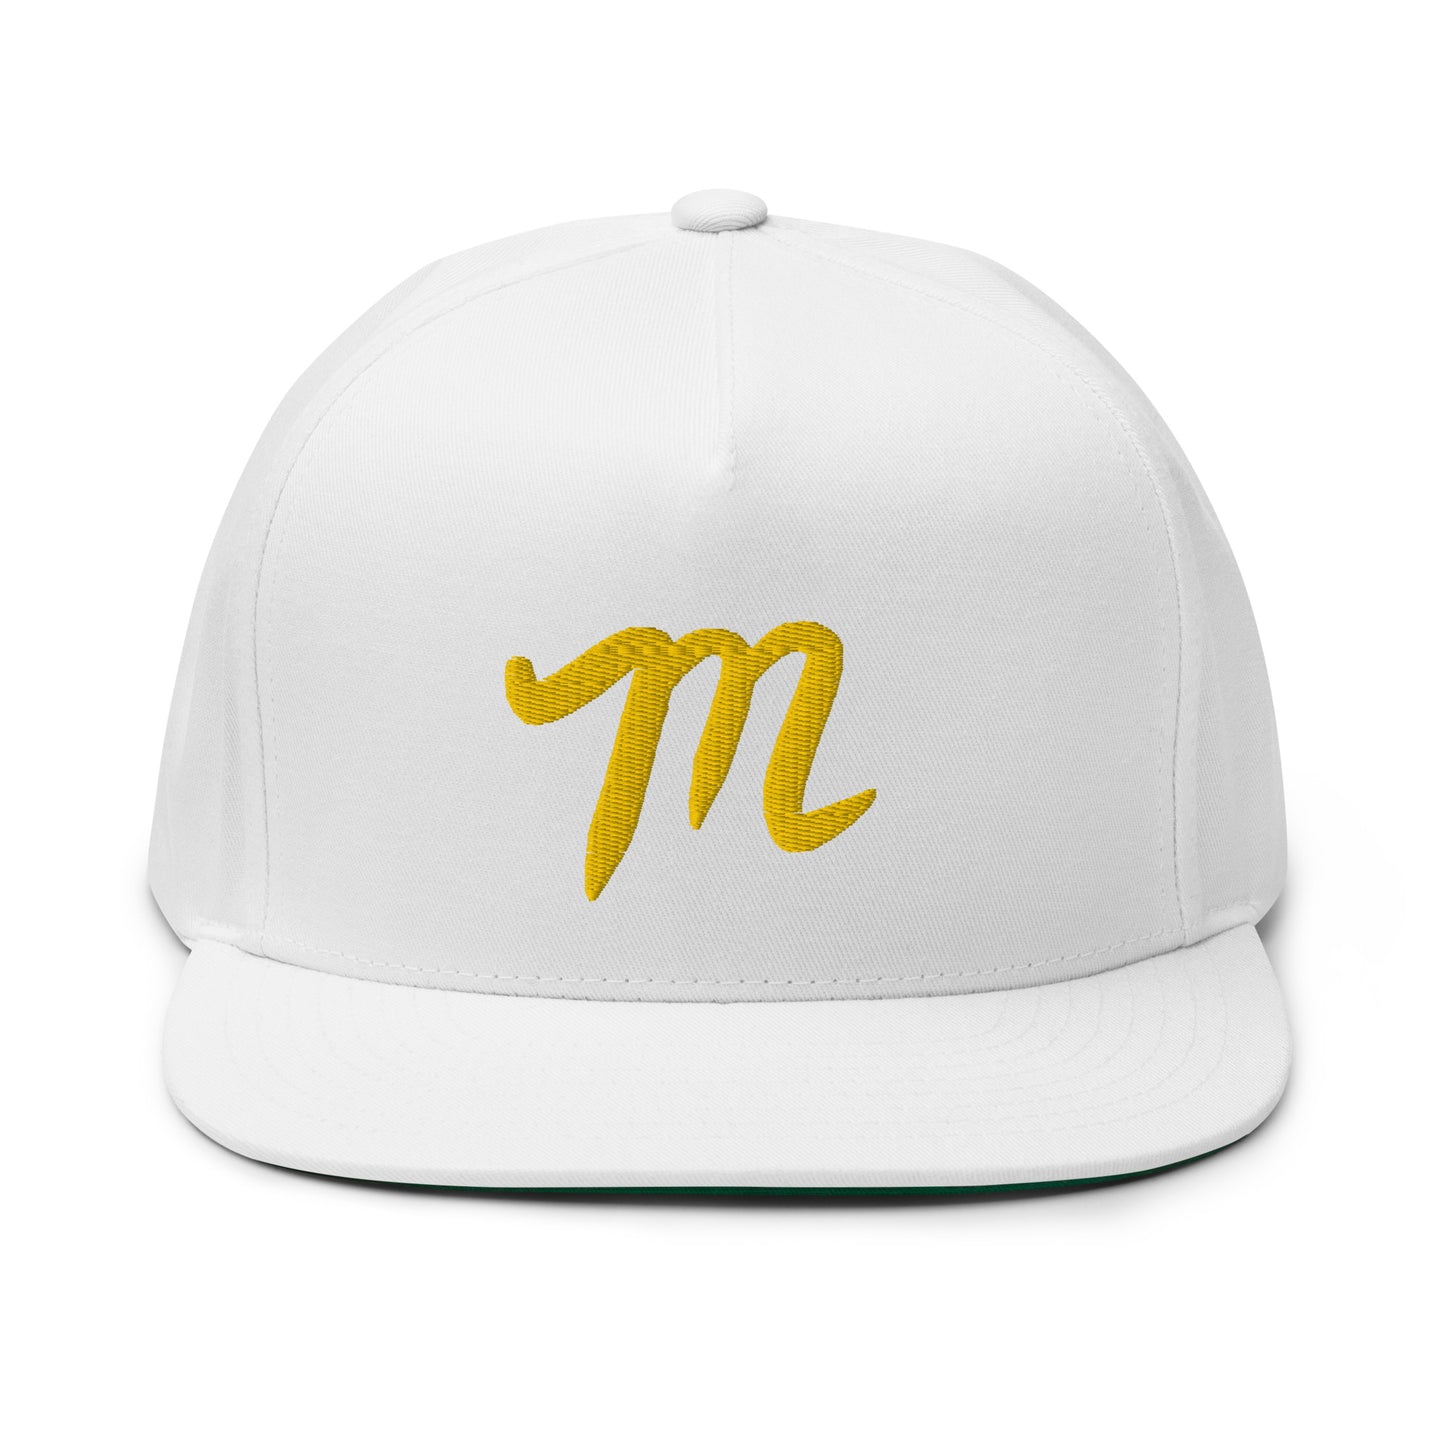 Manolo White hat yellow M Flat Bill Cap